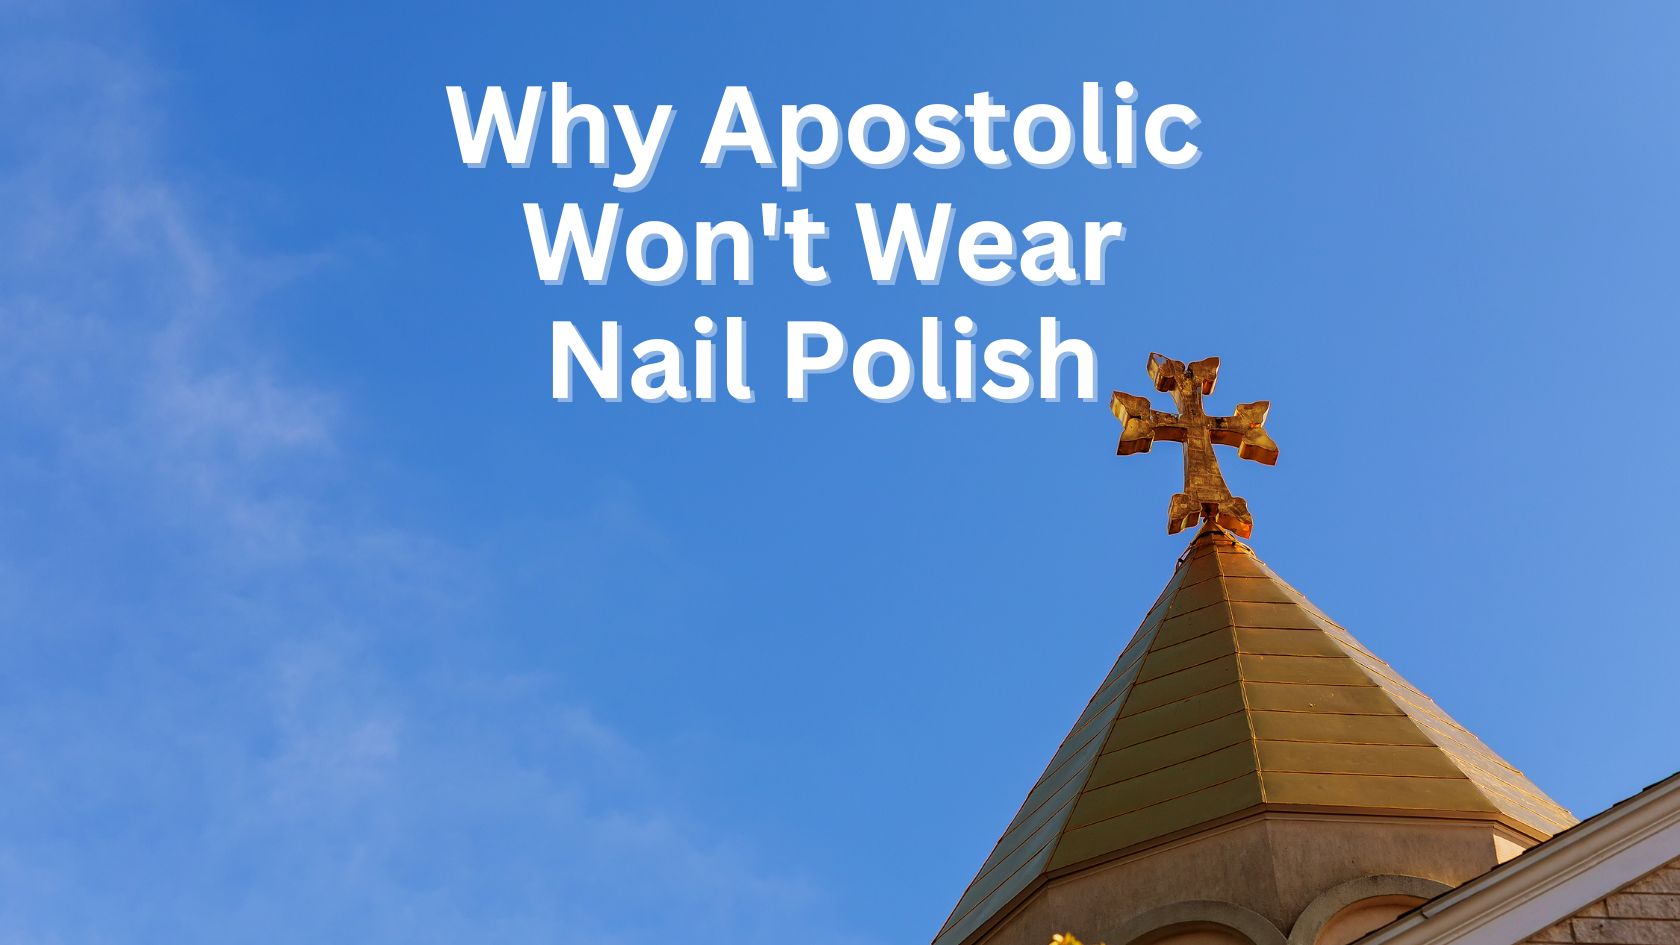 Apostolic Won't Wear Nail Polish